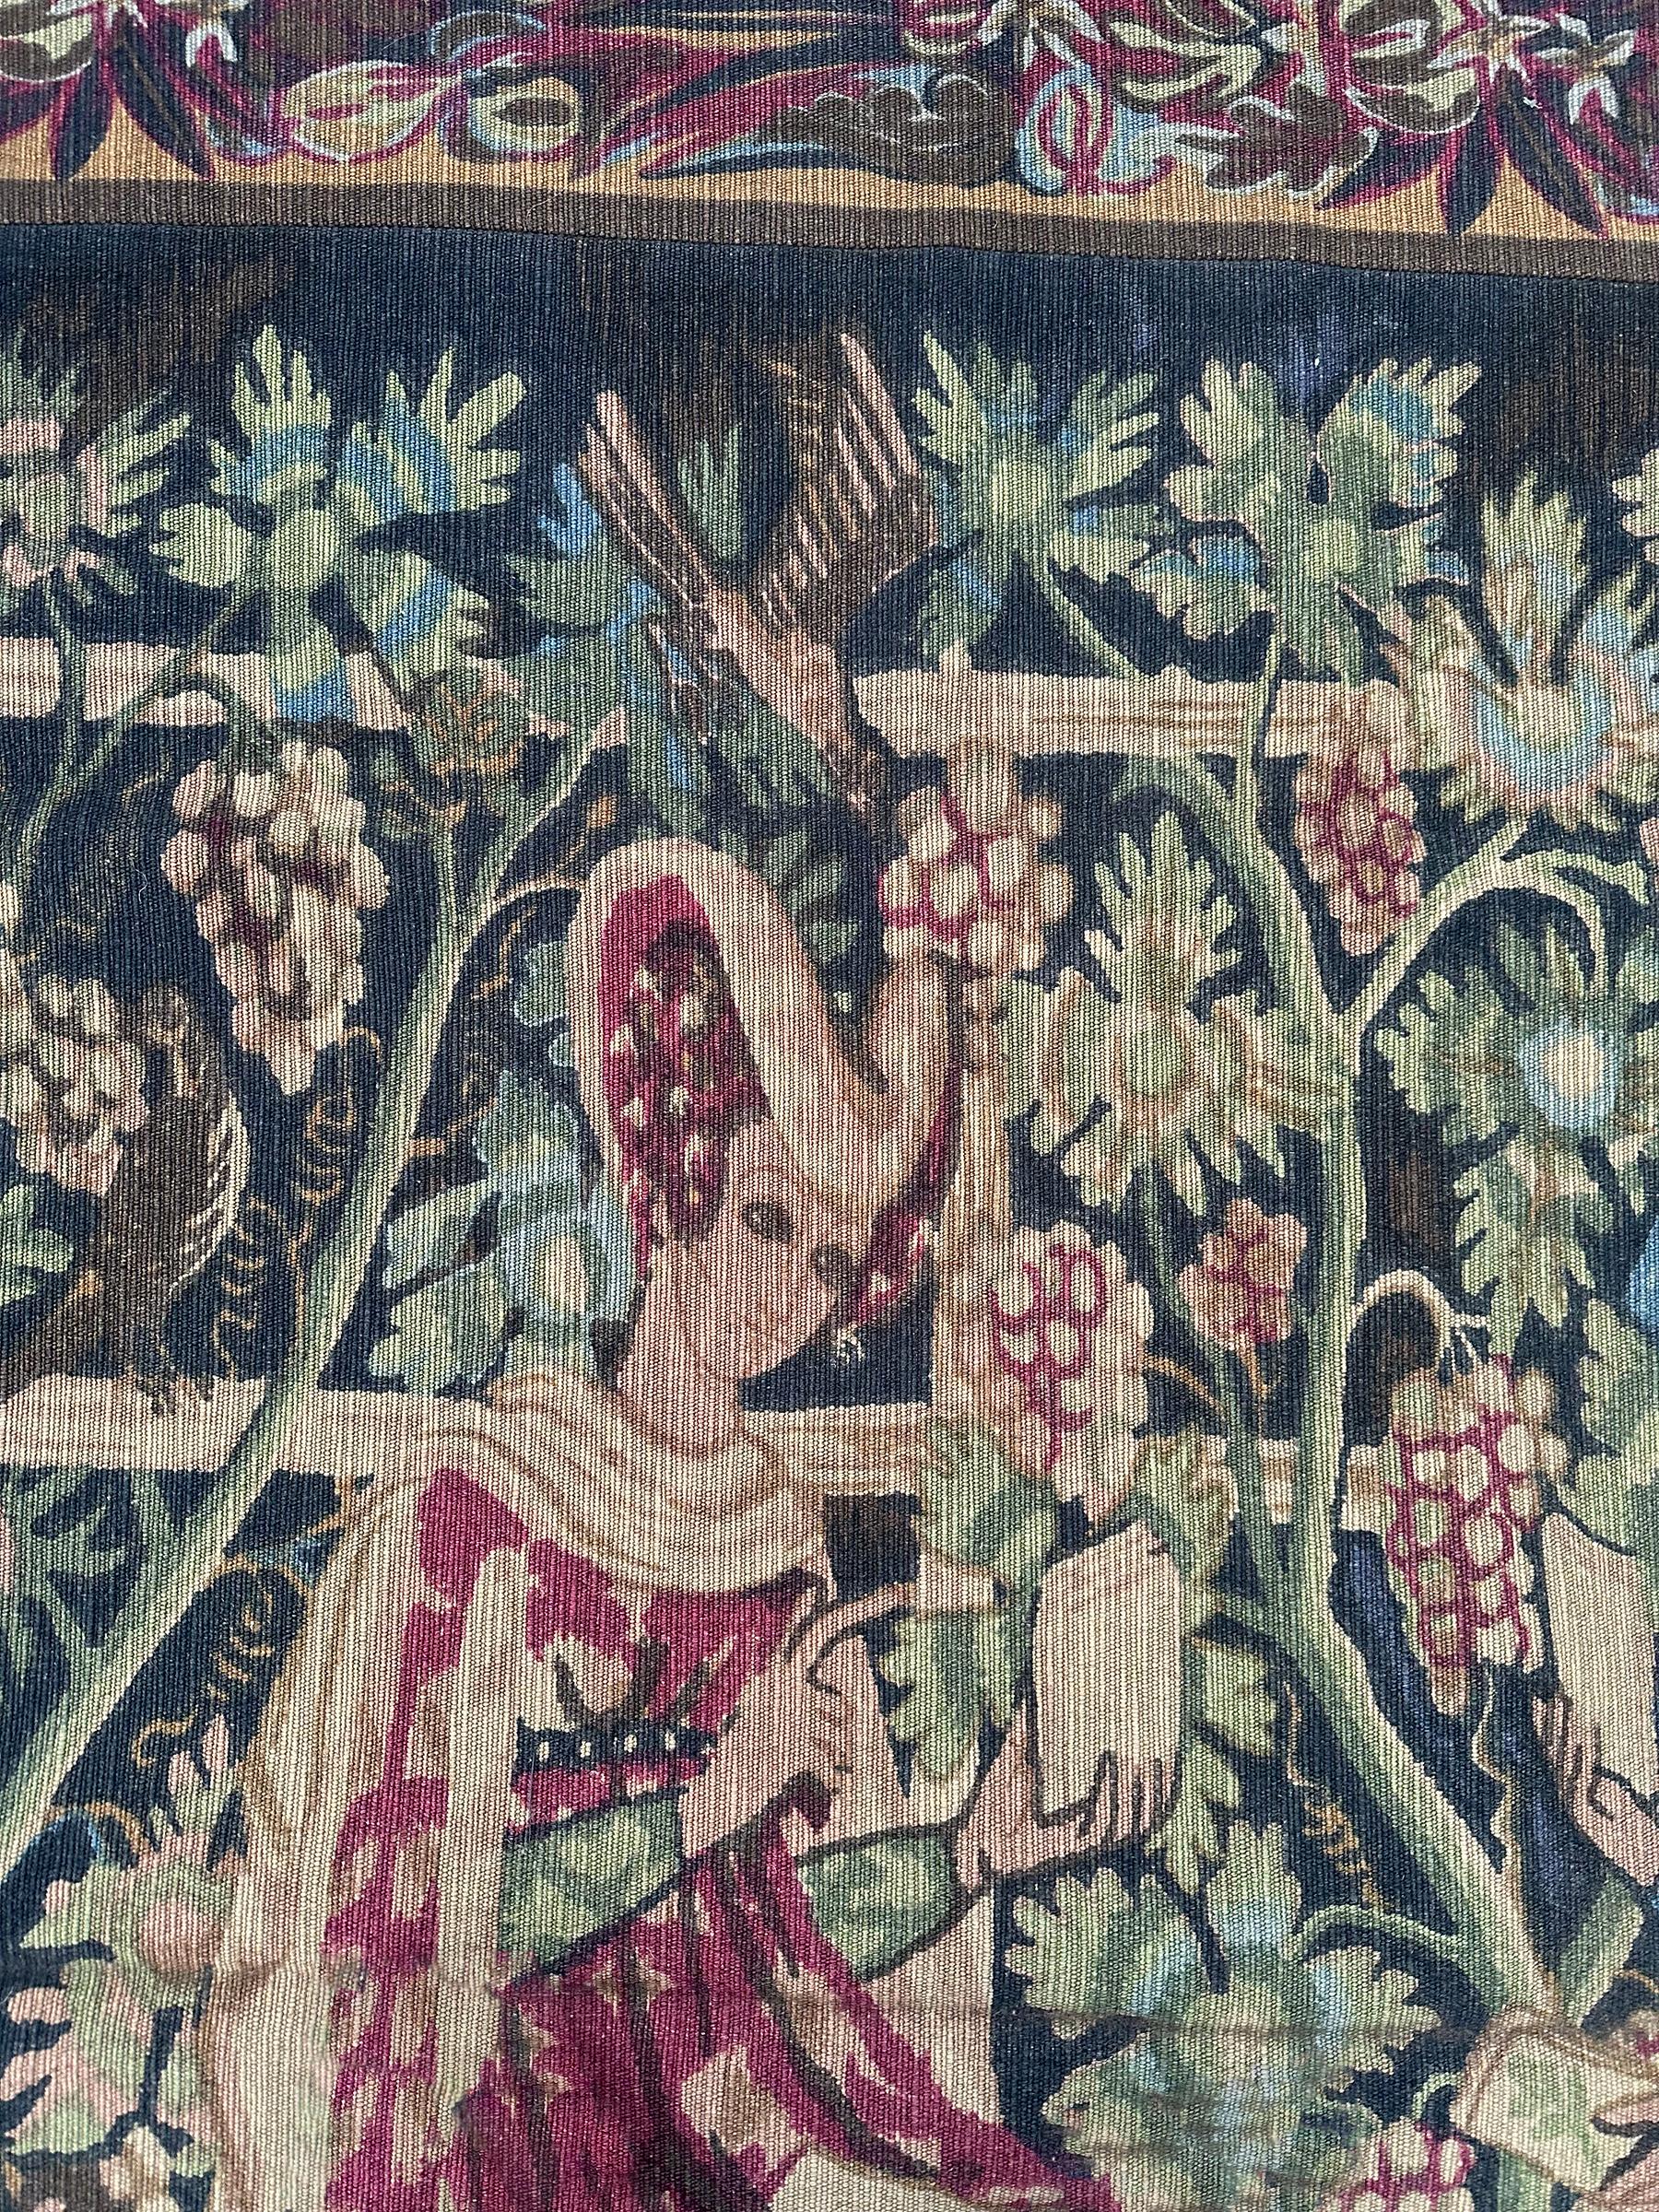 Wool Antique French Tapestry Verdure Noblemen Royalty Verdure 5x9 158cm x 272cm 1920 For Sale